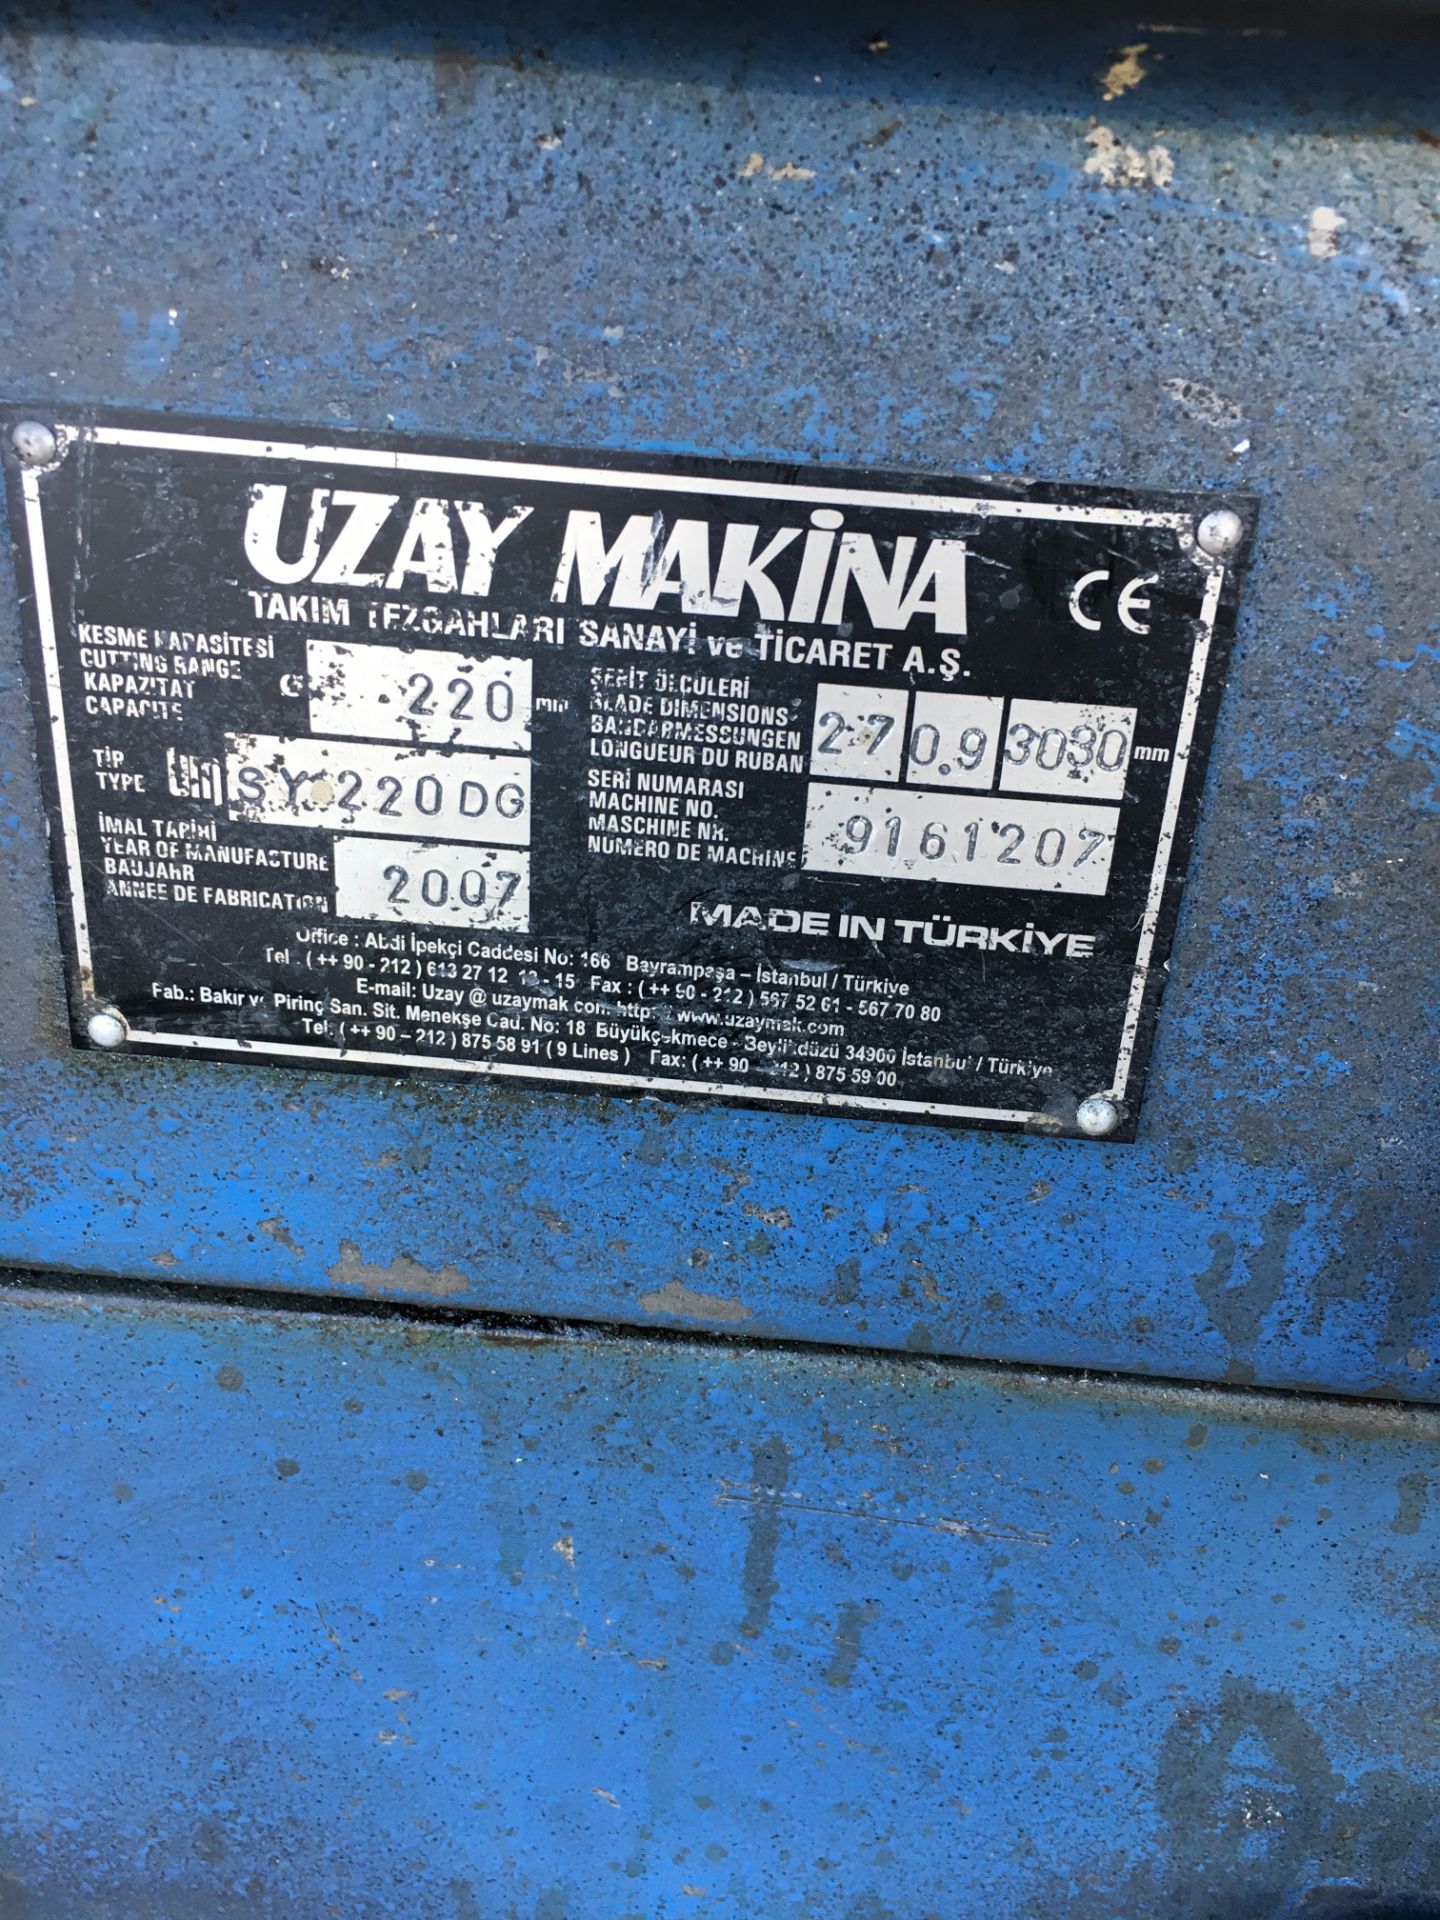 Uzay Makina 220DG Band Saw - Image 7 of 7